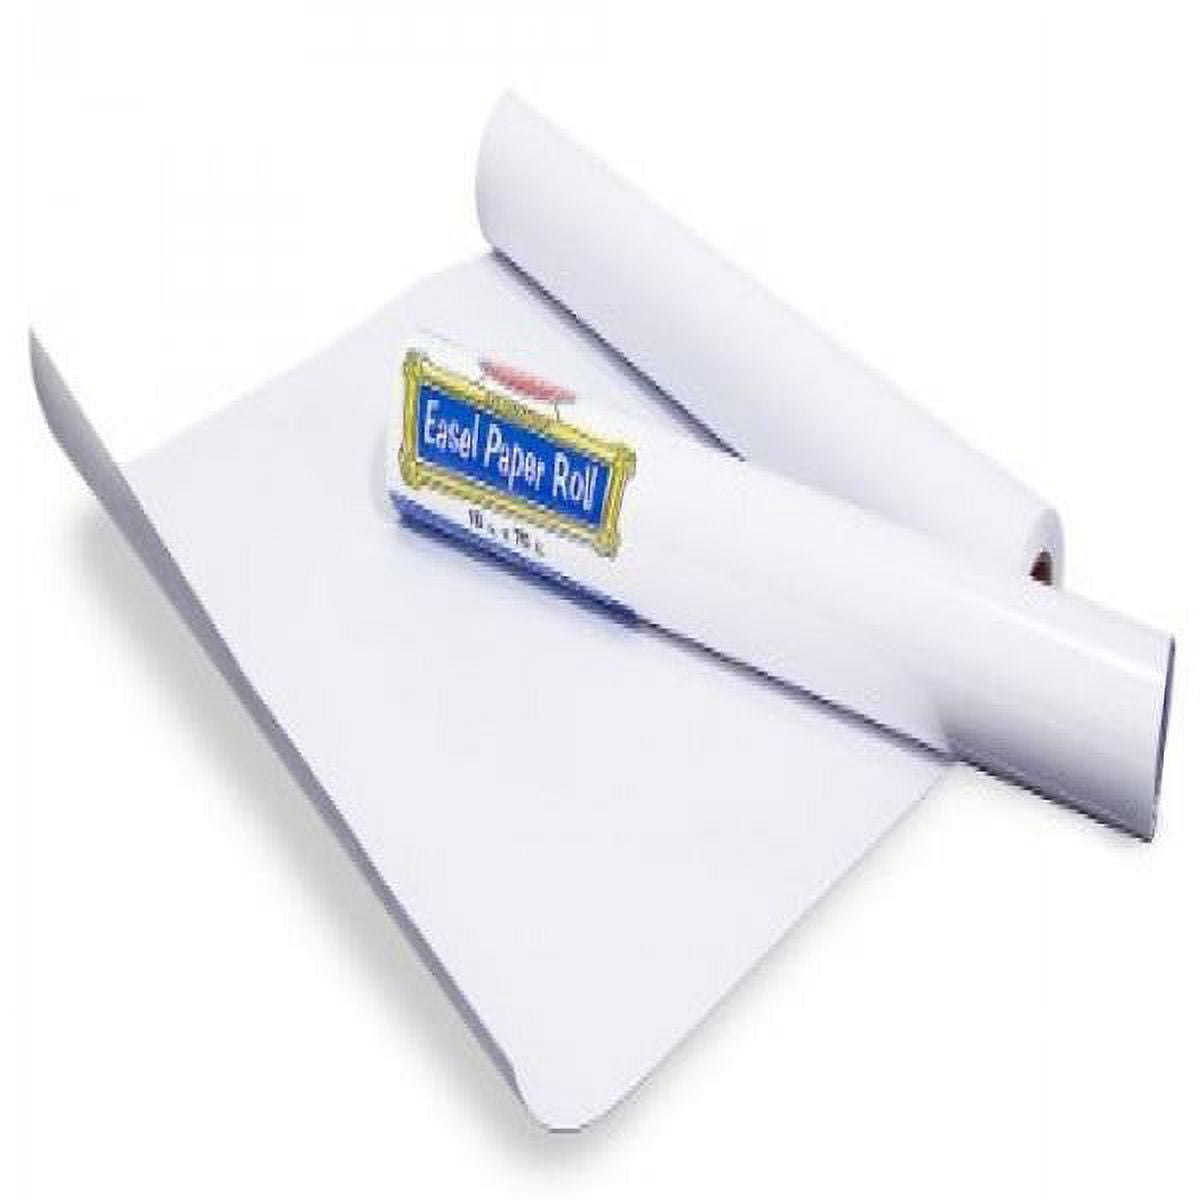 Melissa & Doug Easel Paper Roll (31cm x 23m) - HelloSupermarket